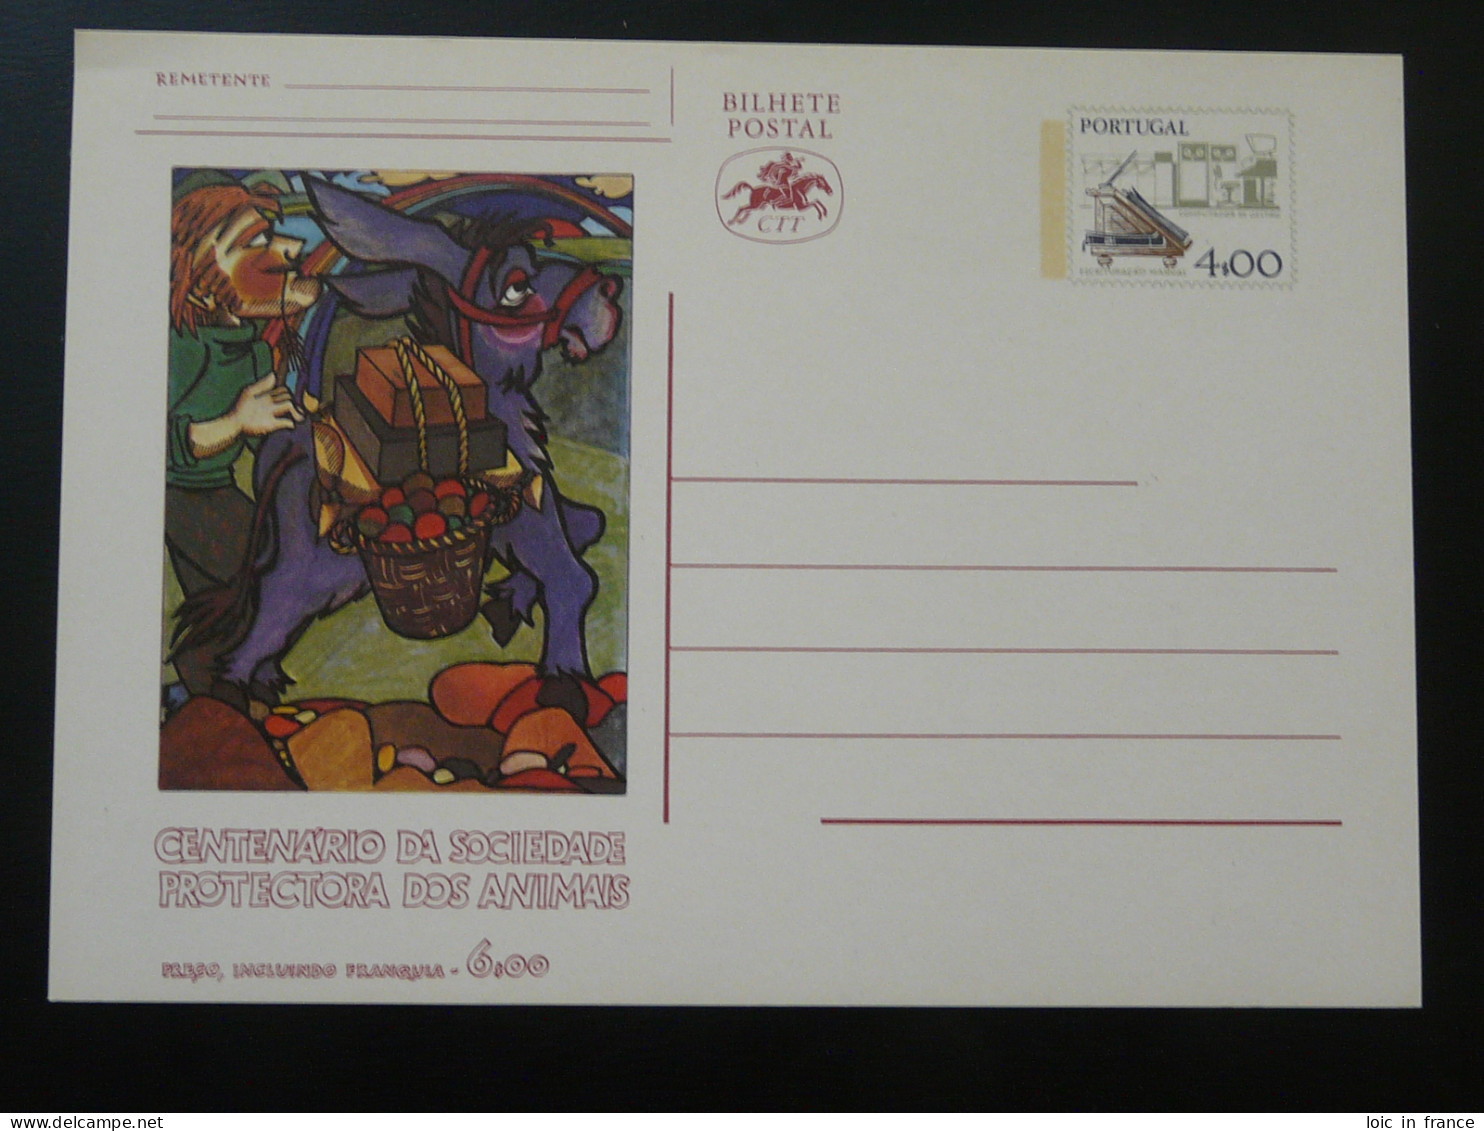 Entier Postal Stationery Card Ane Donkey Portugal 1978 - Ezels